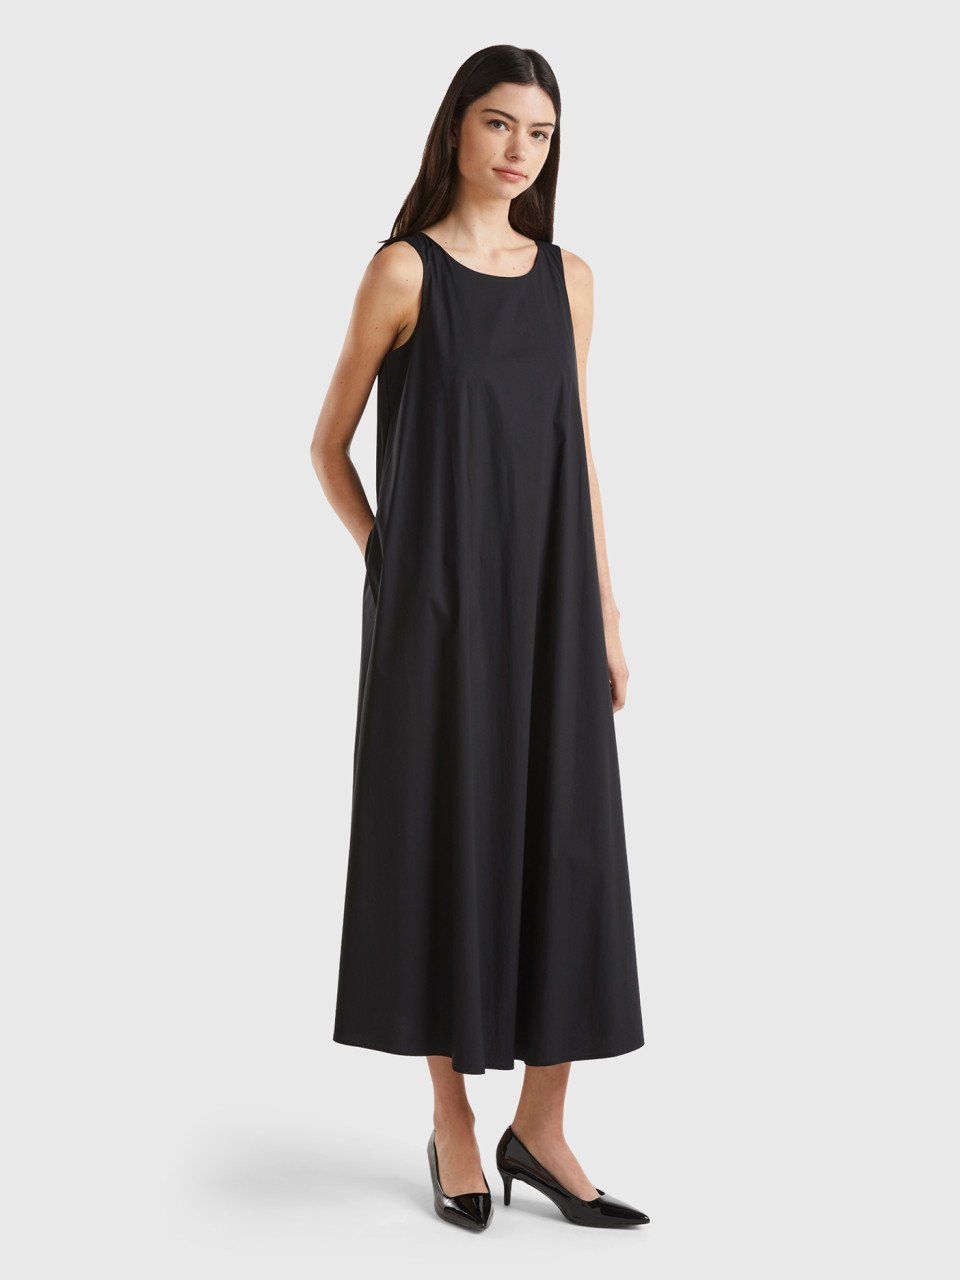 Benetton, Long Sleeveless Dress, Black, Women